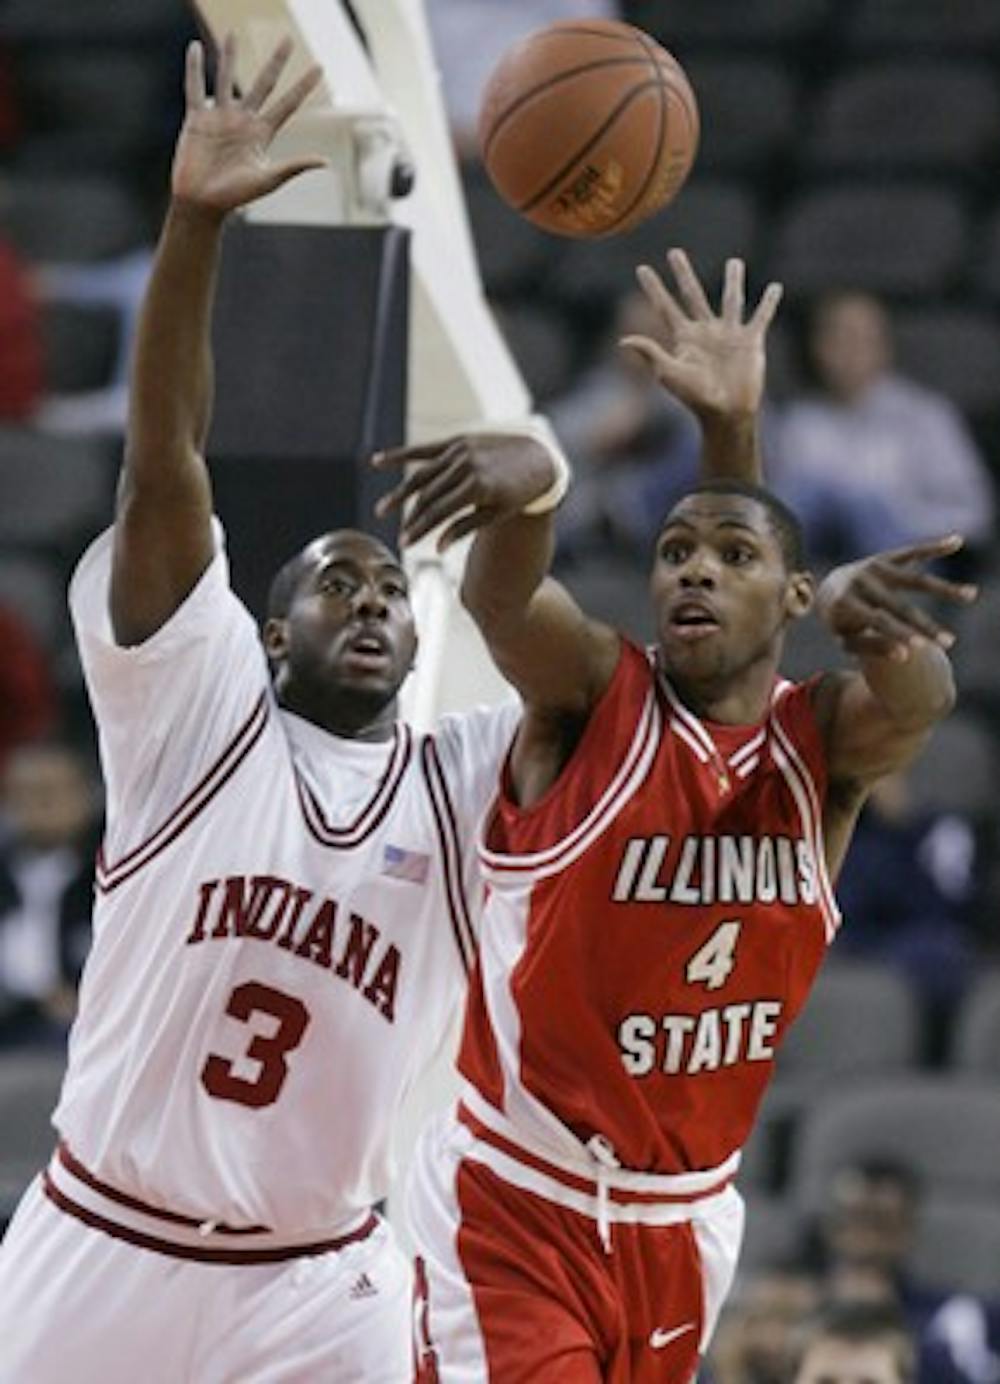 Indiana Illinois State Basketball